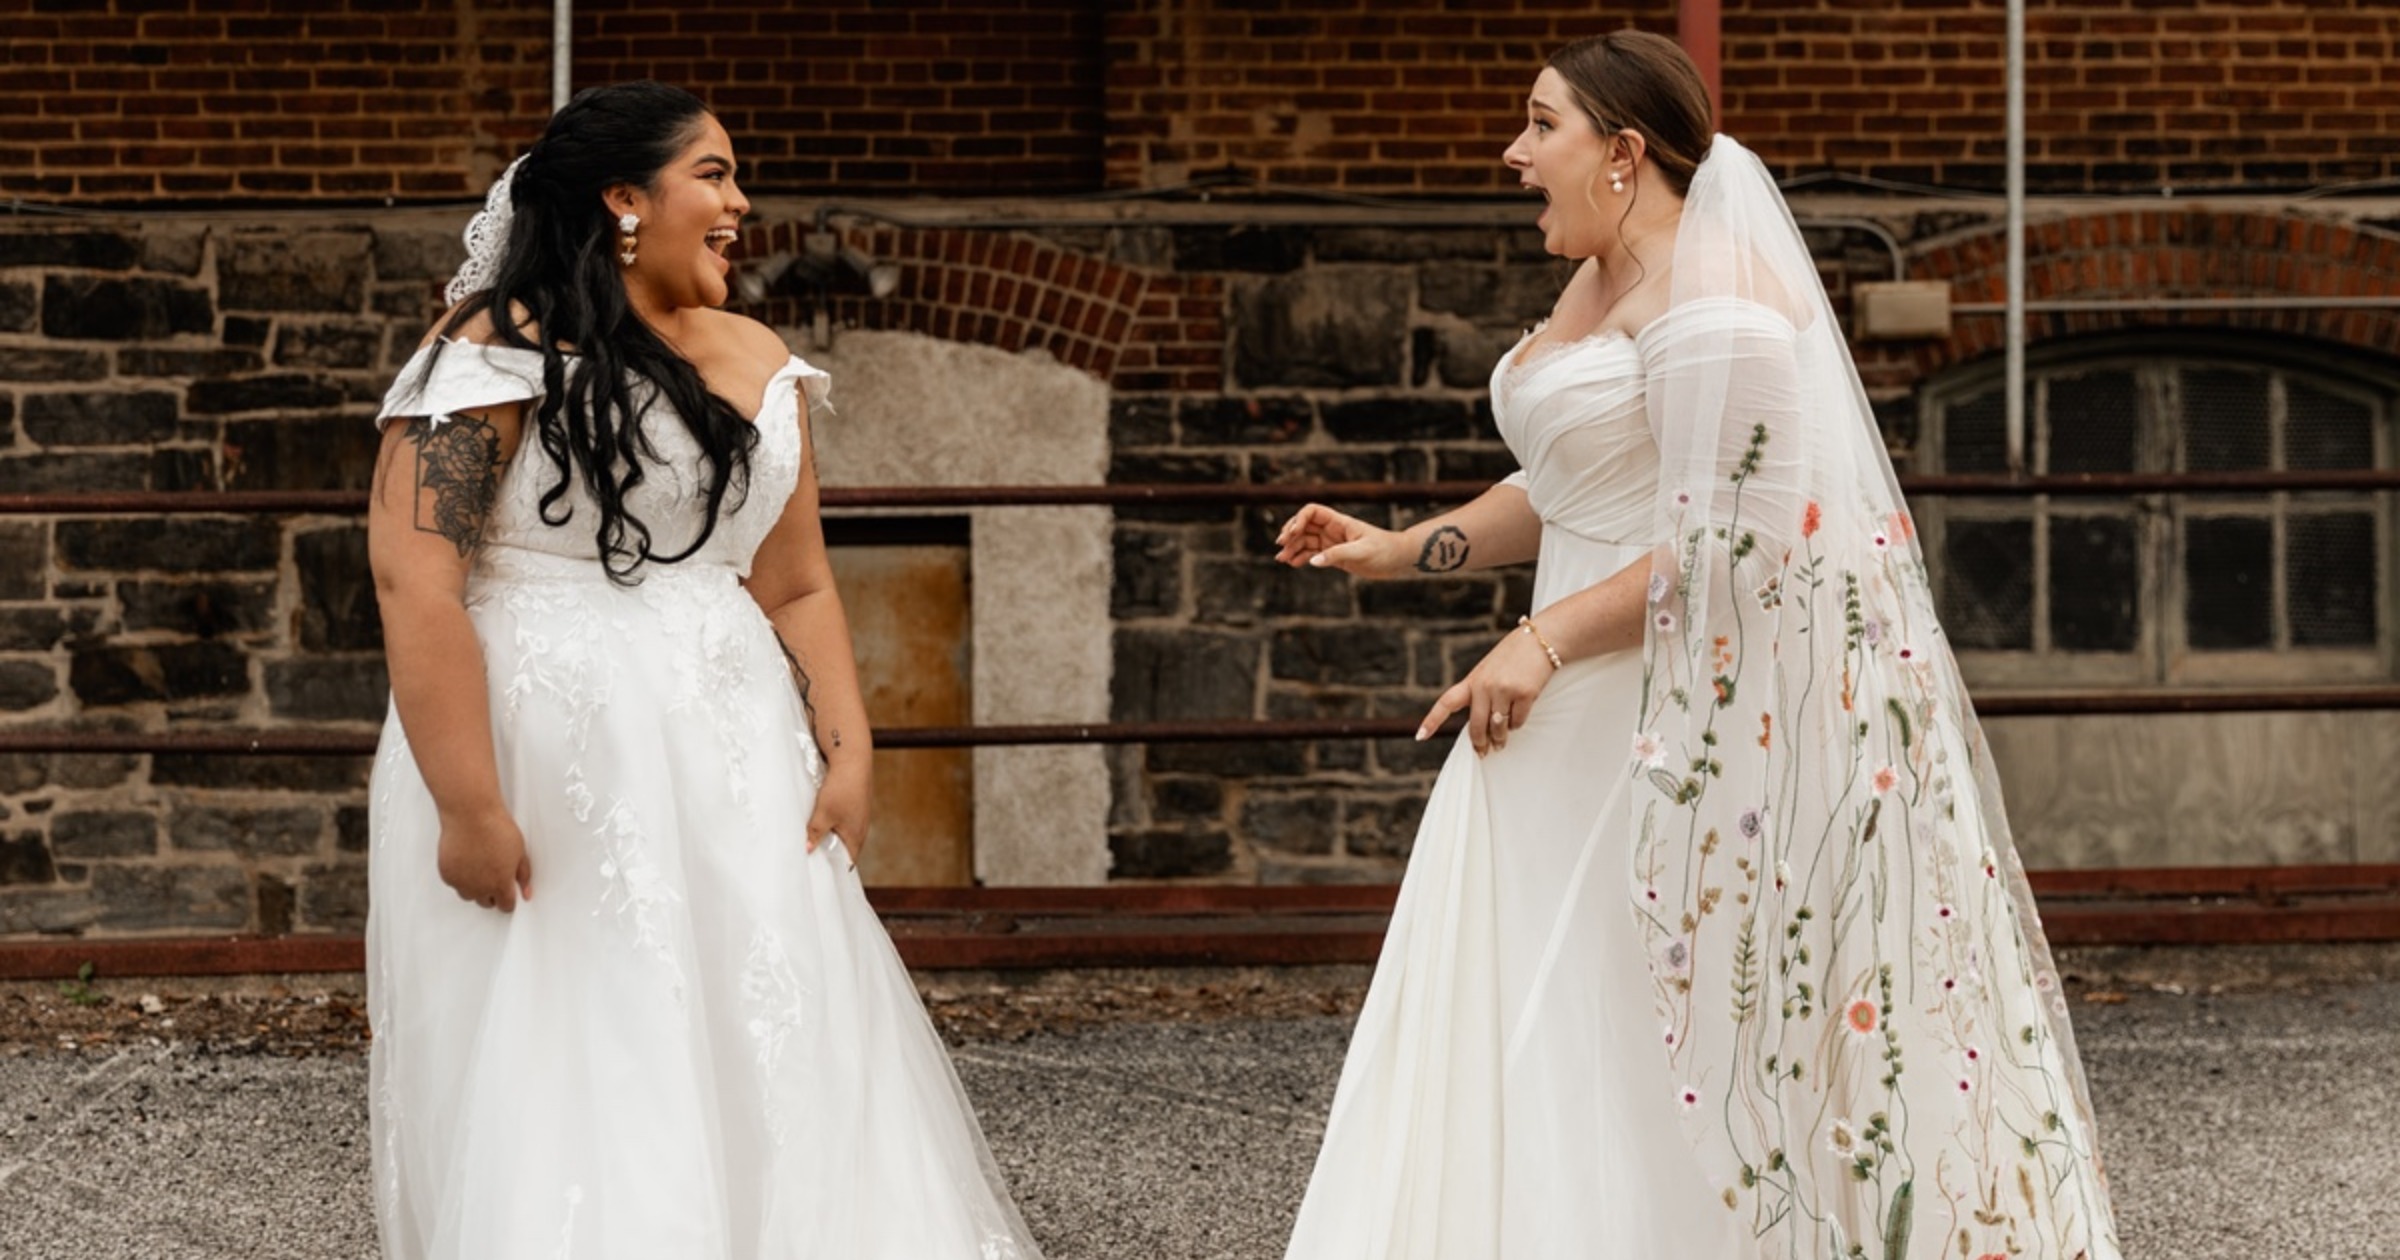 Baltimore Brides Wed in Soft Industrial Wedding